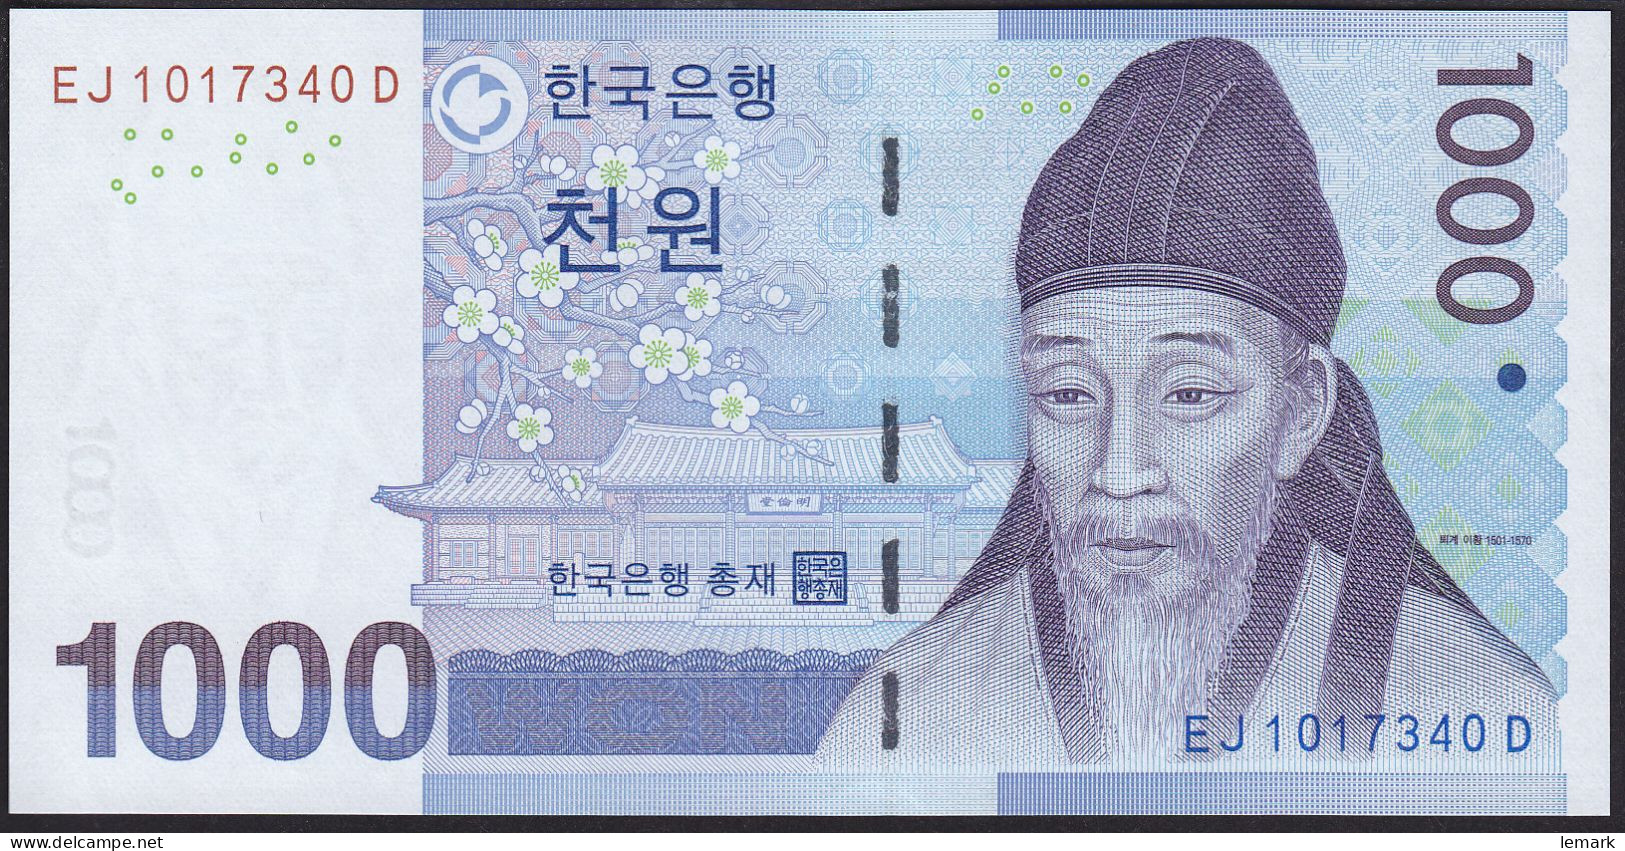 South Korea 1000 Won 2007 P54 UNC - Corea Del Sud